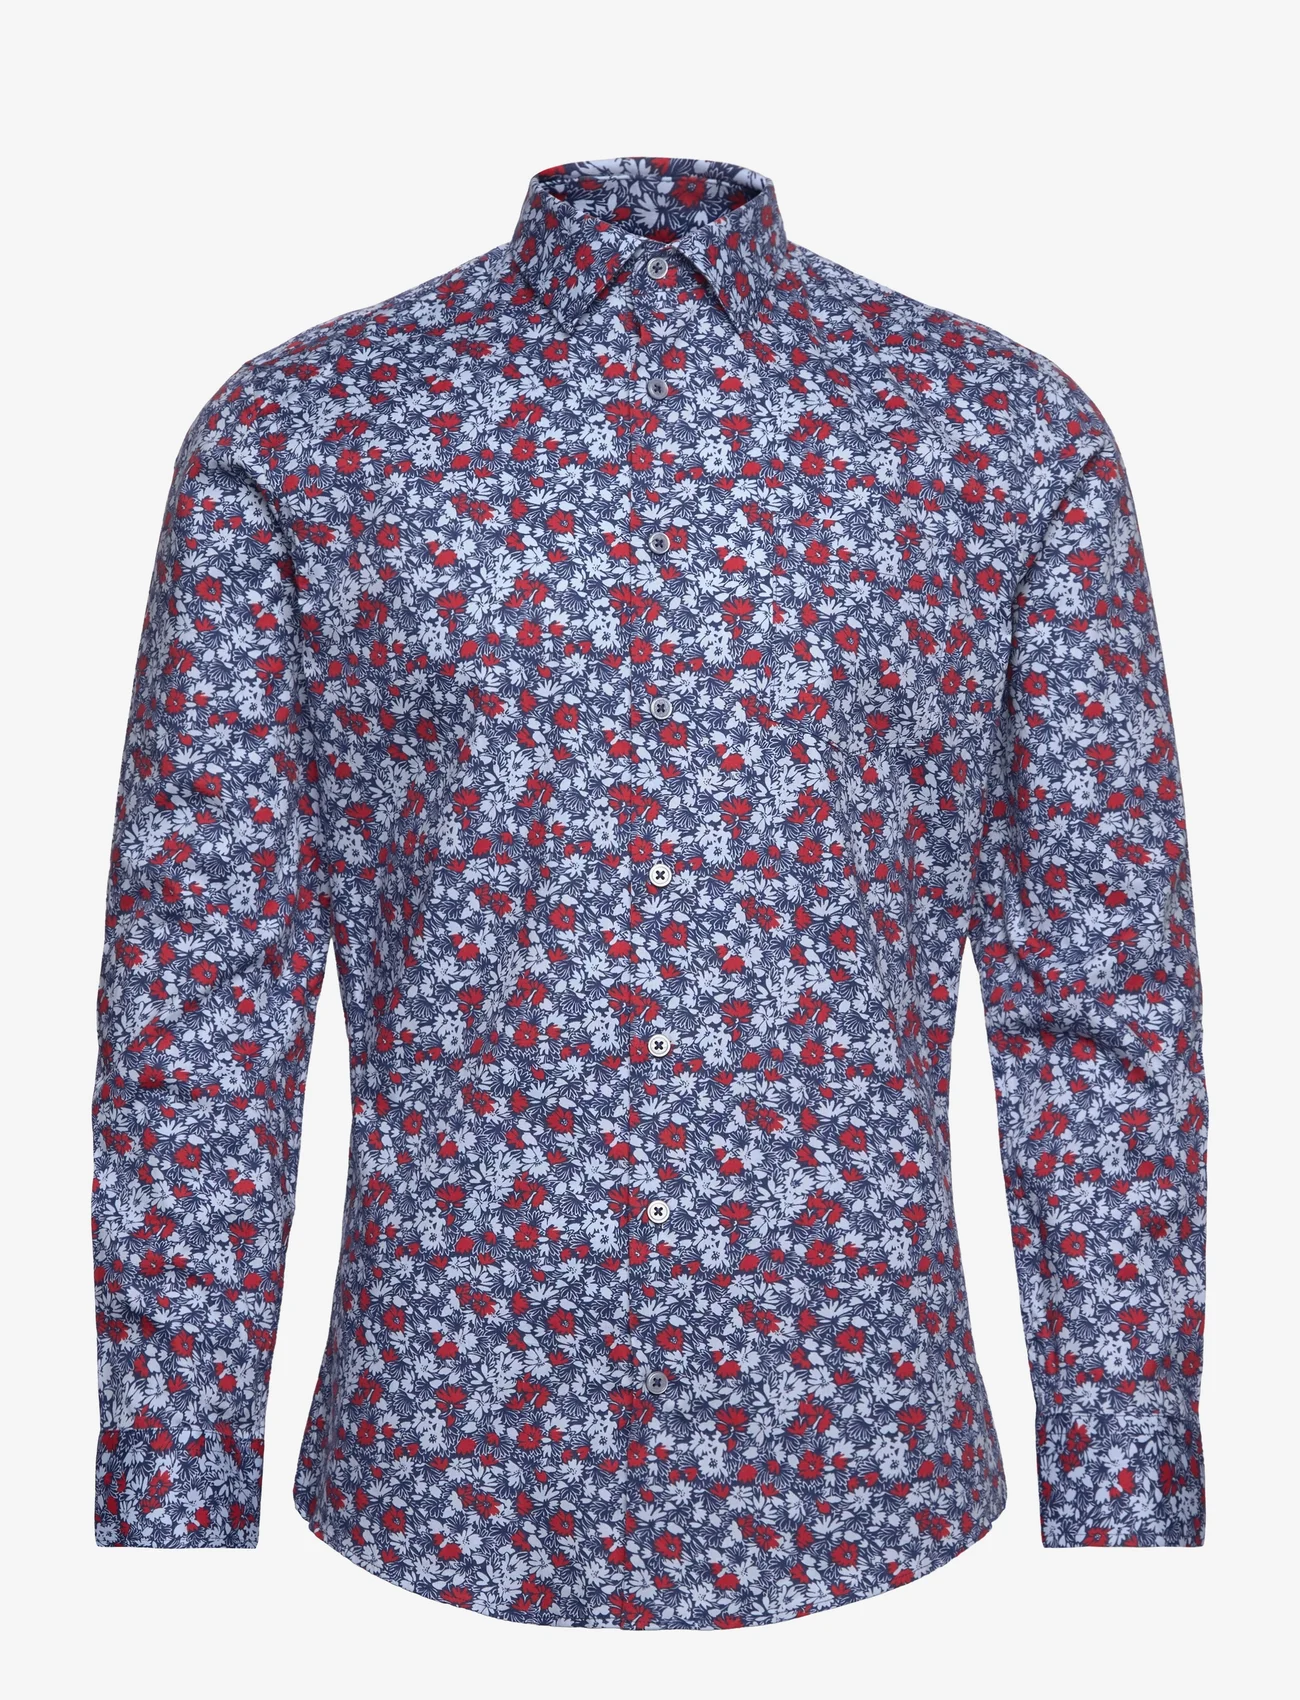 Lindbergh - AOP plain stretch shirt L/S - avslappede skjorter - blue - 0